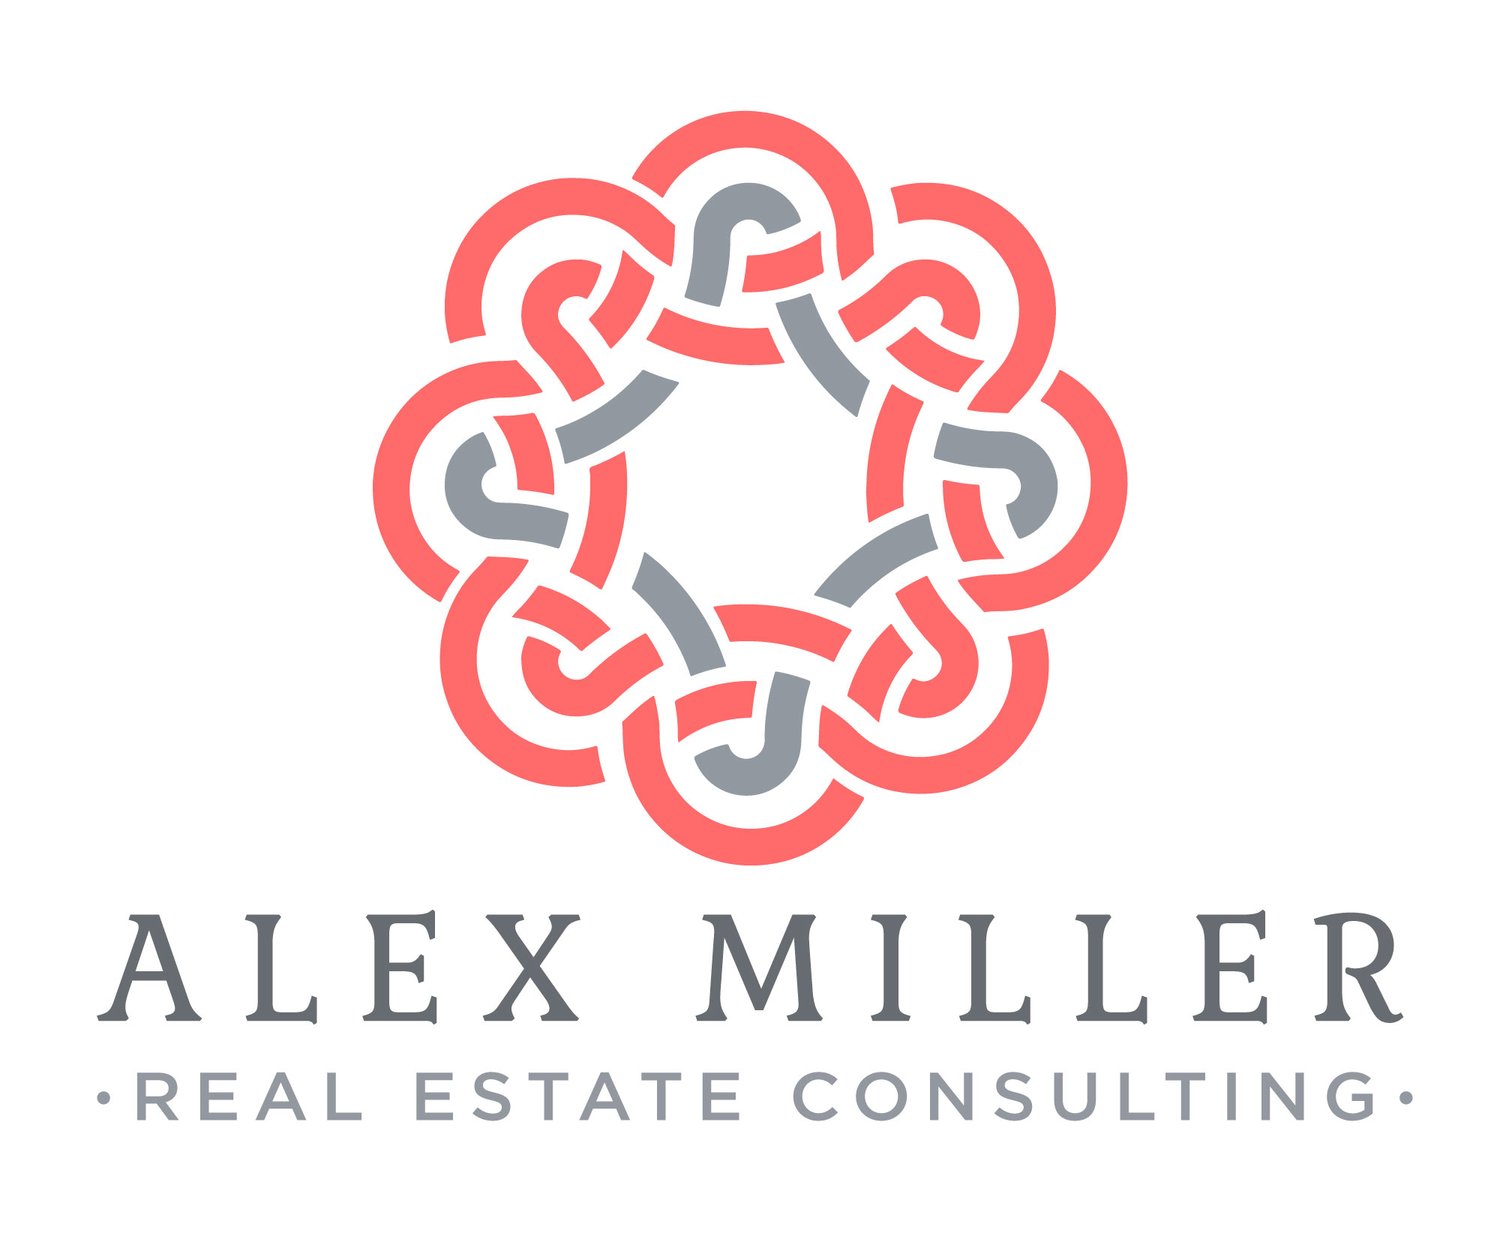 Alex Miller Real Estate Consulting - Decatur + Atlanta Realtor